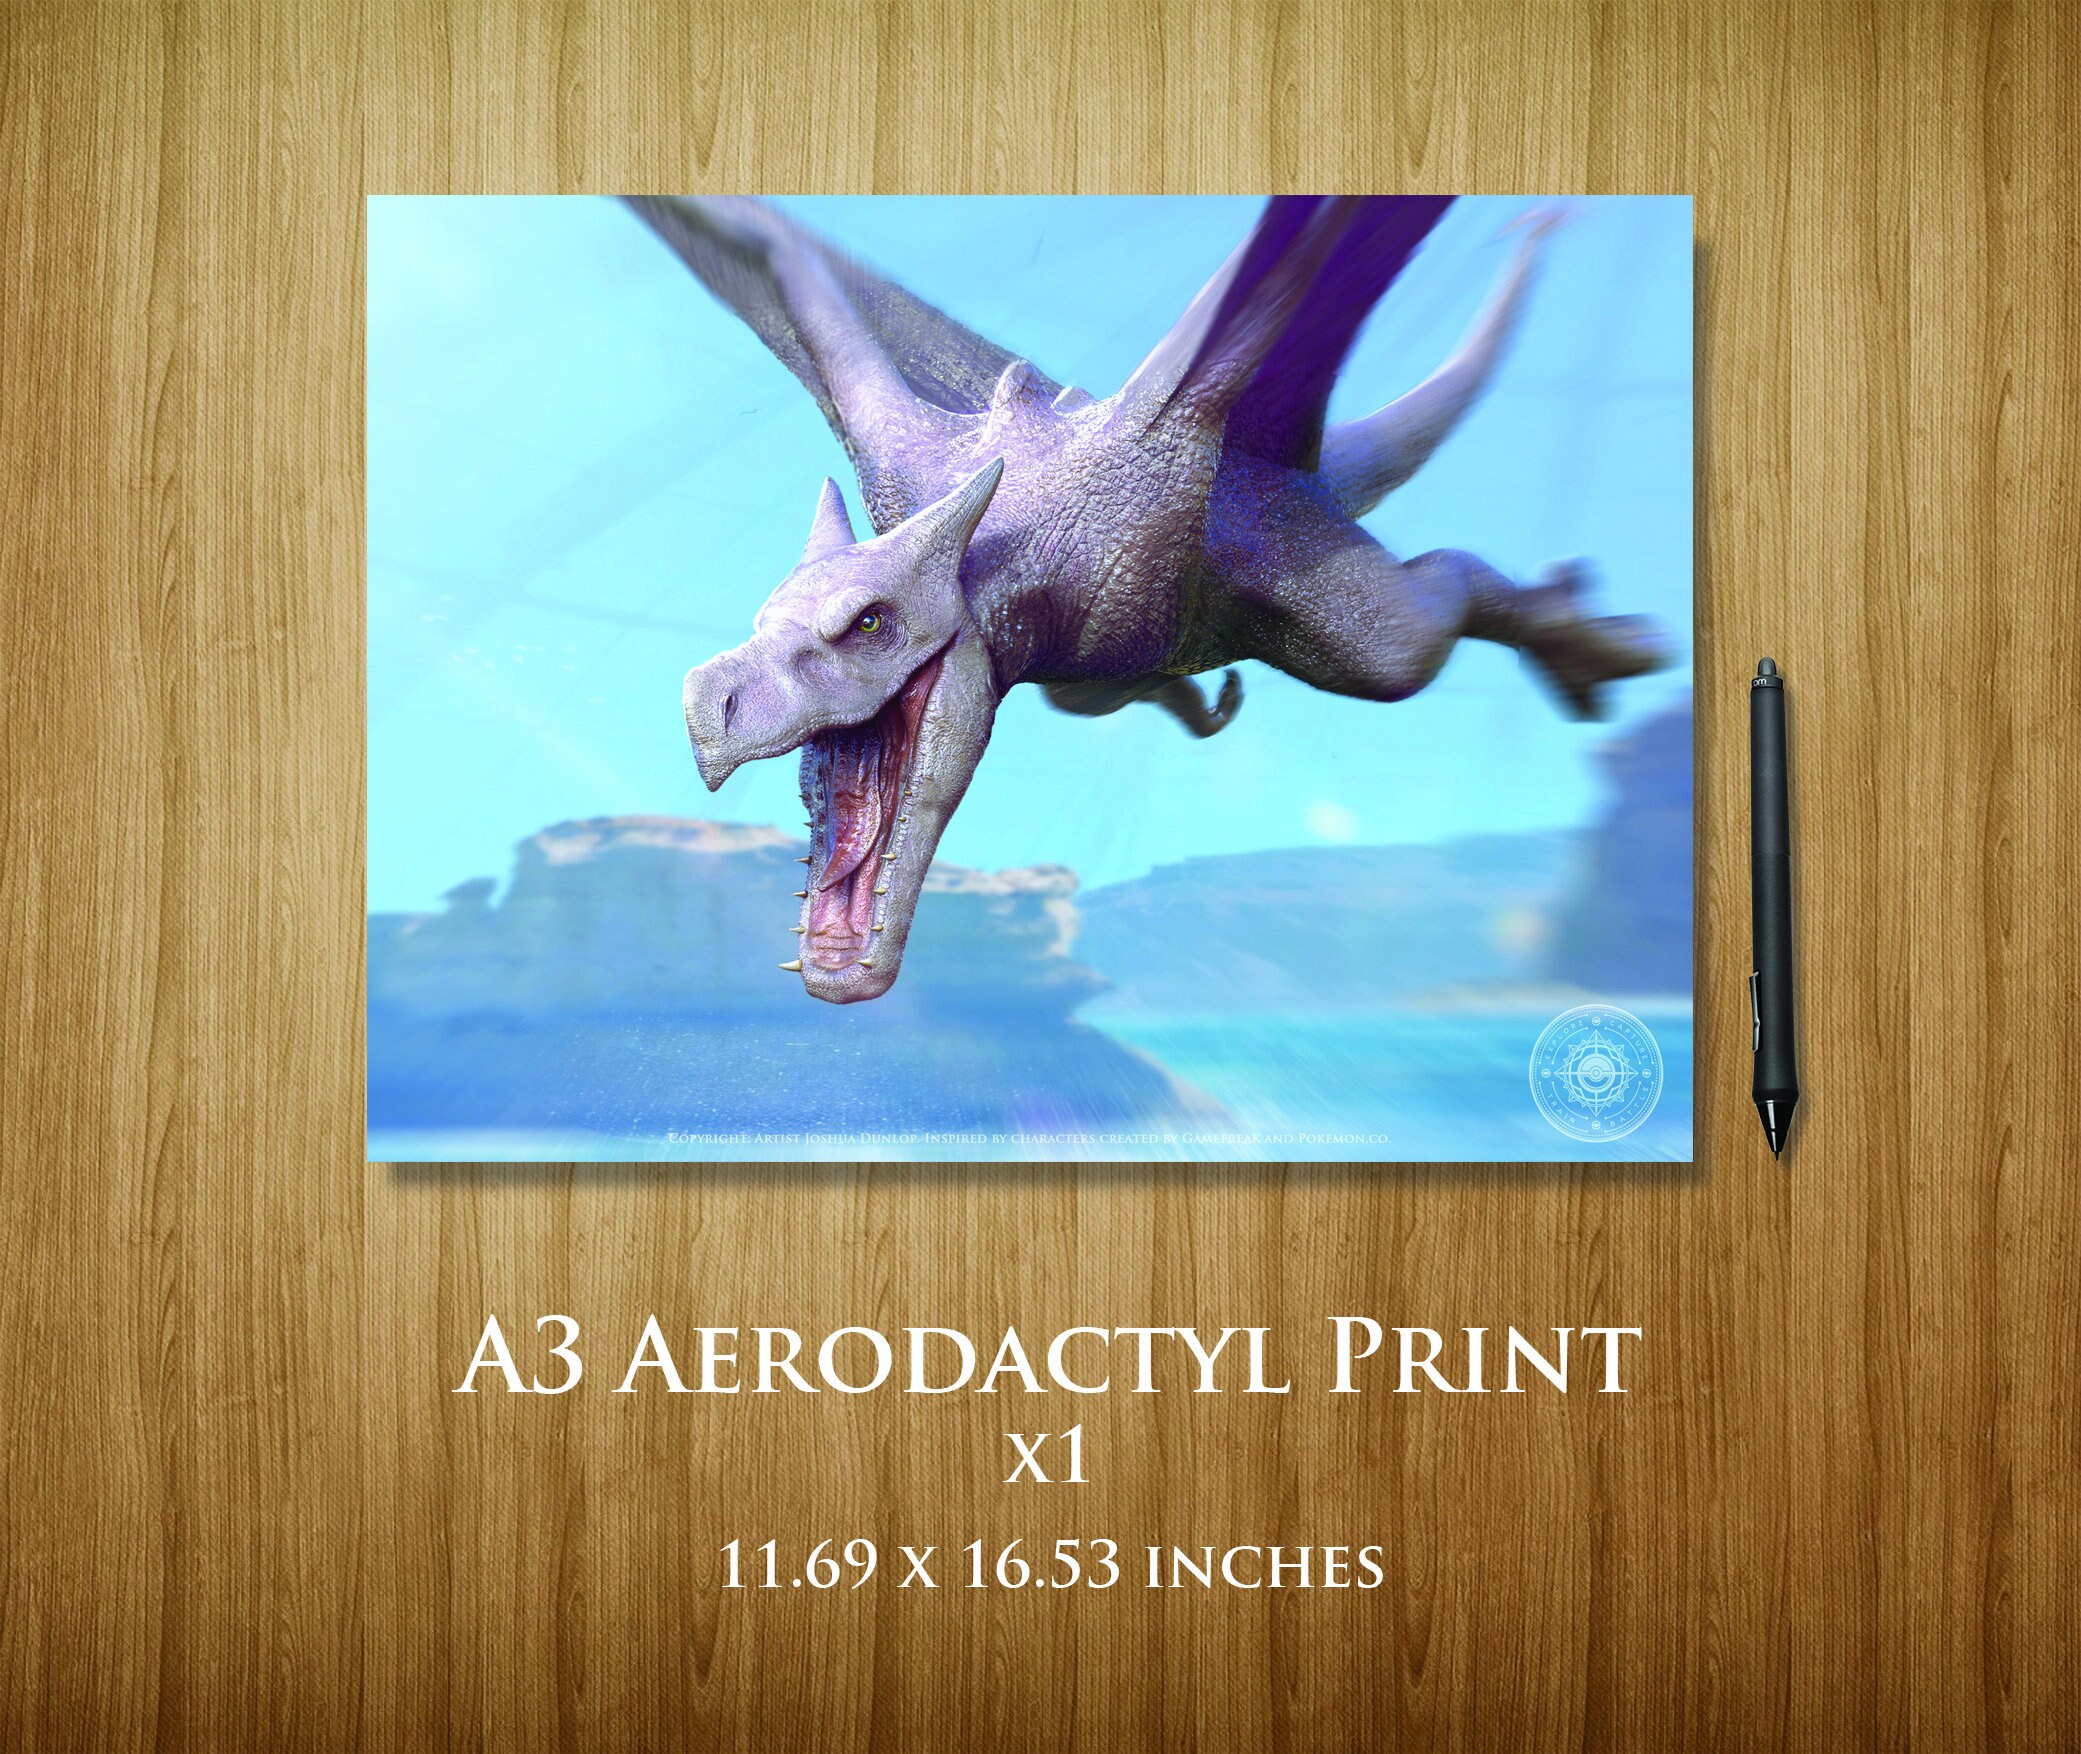 Aerodactyl Print